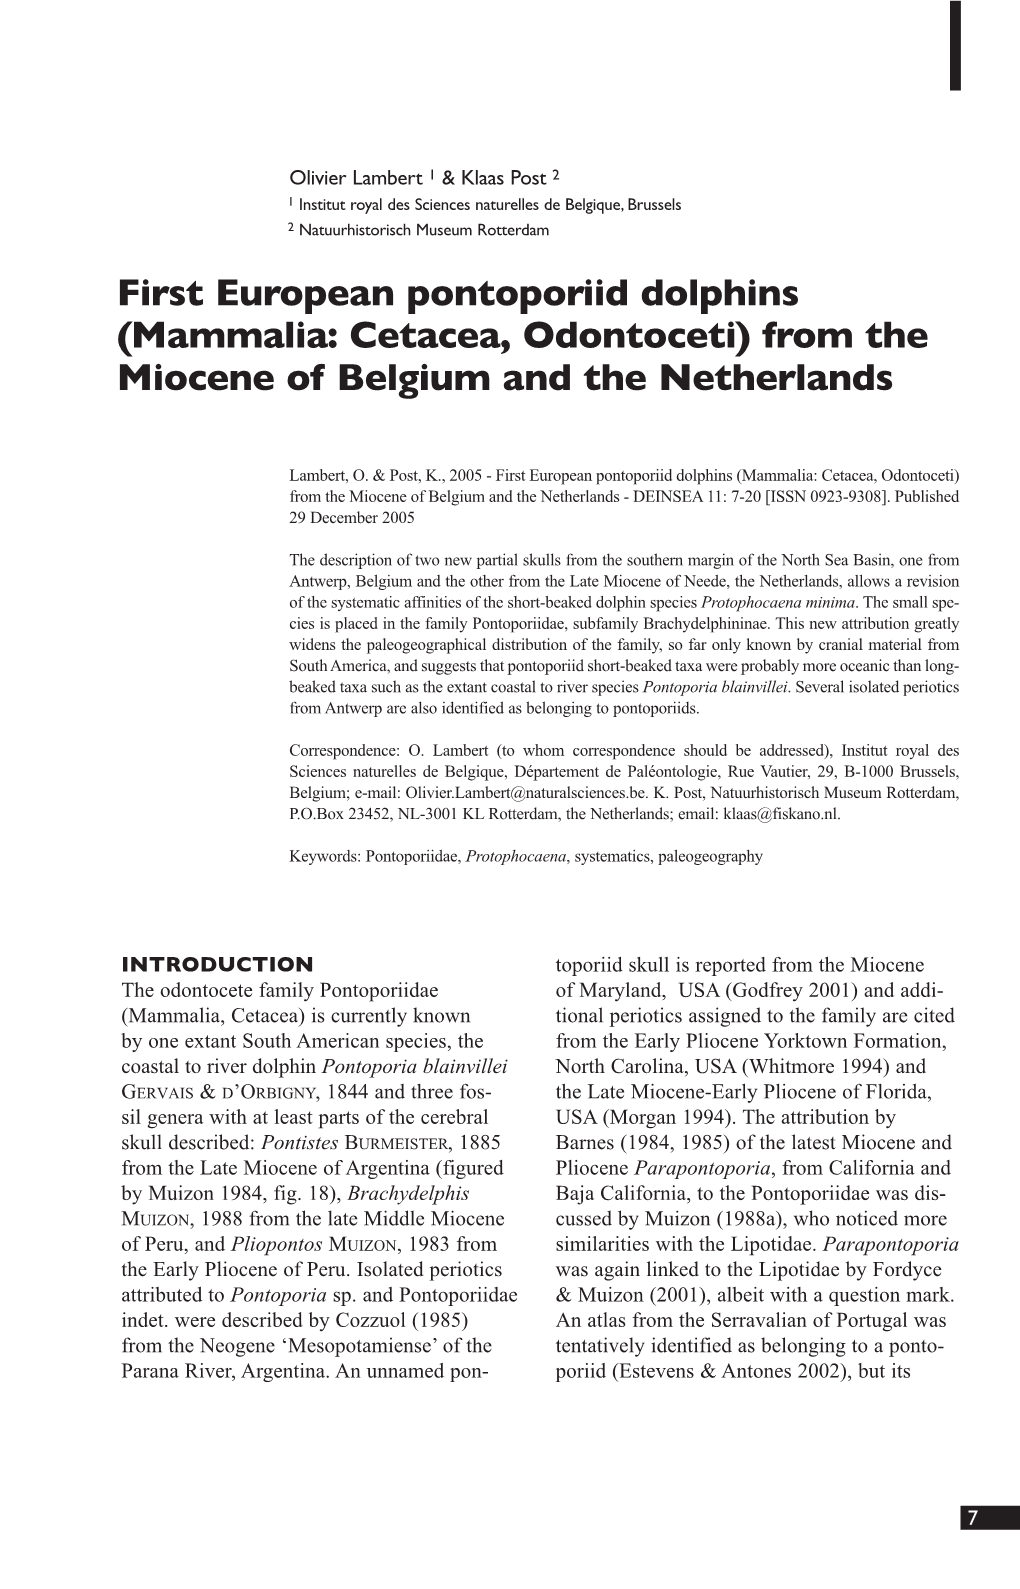 (Mammalia: Cetacea, Odontoceti) from the Miocene of Belgium and the Netherlands